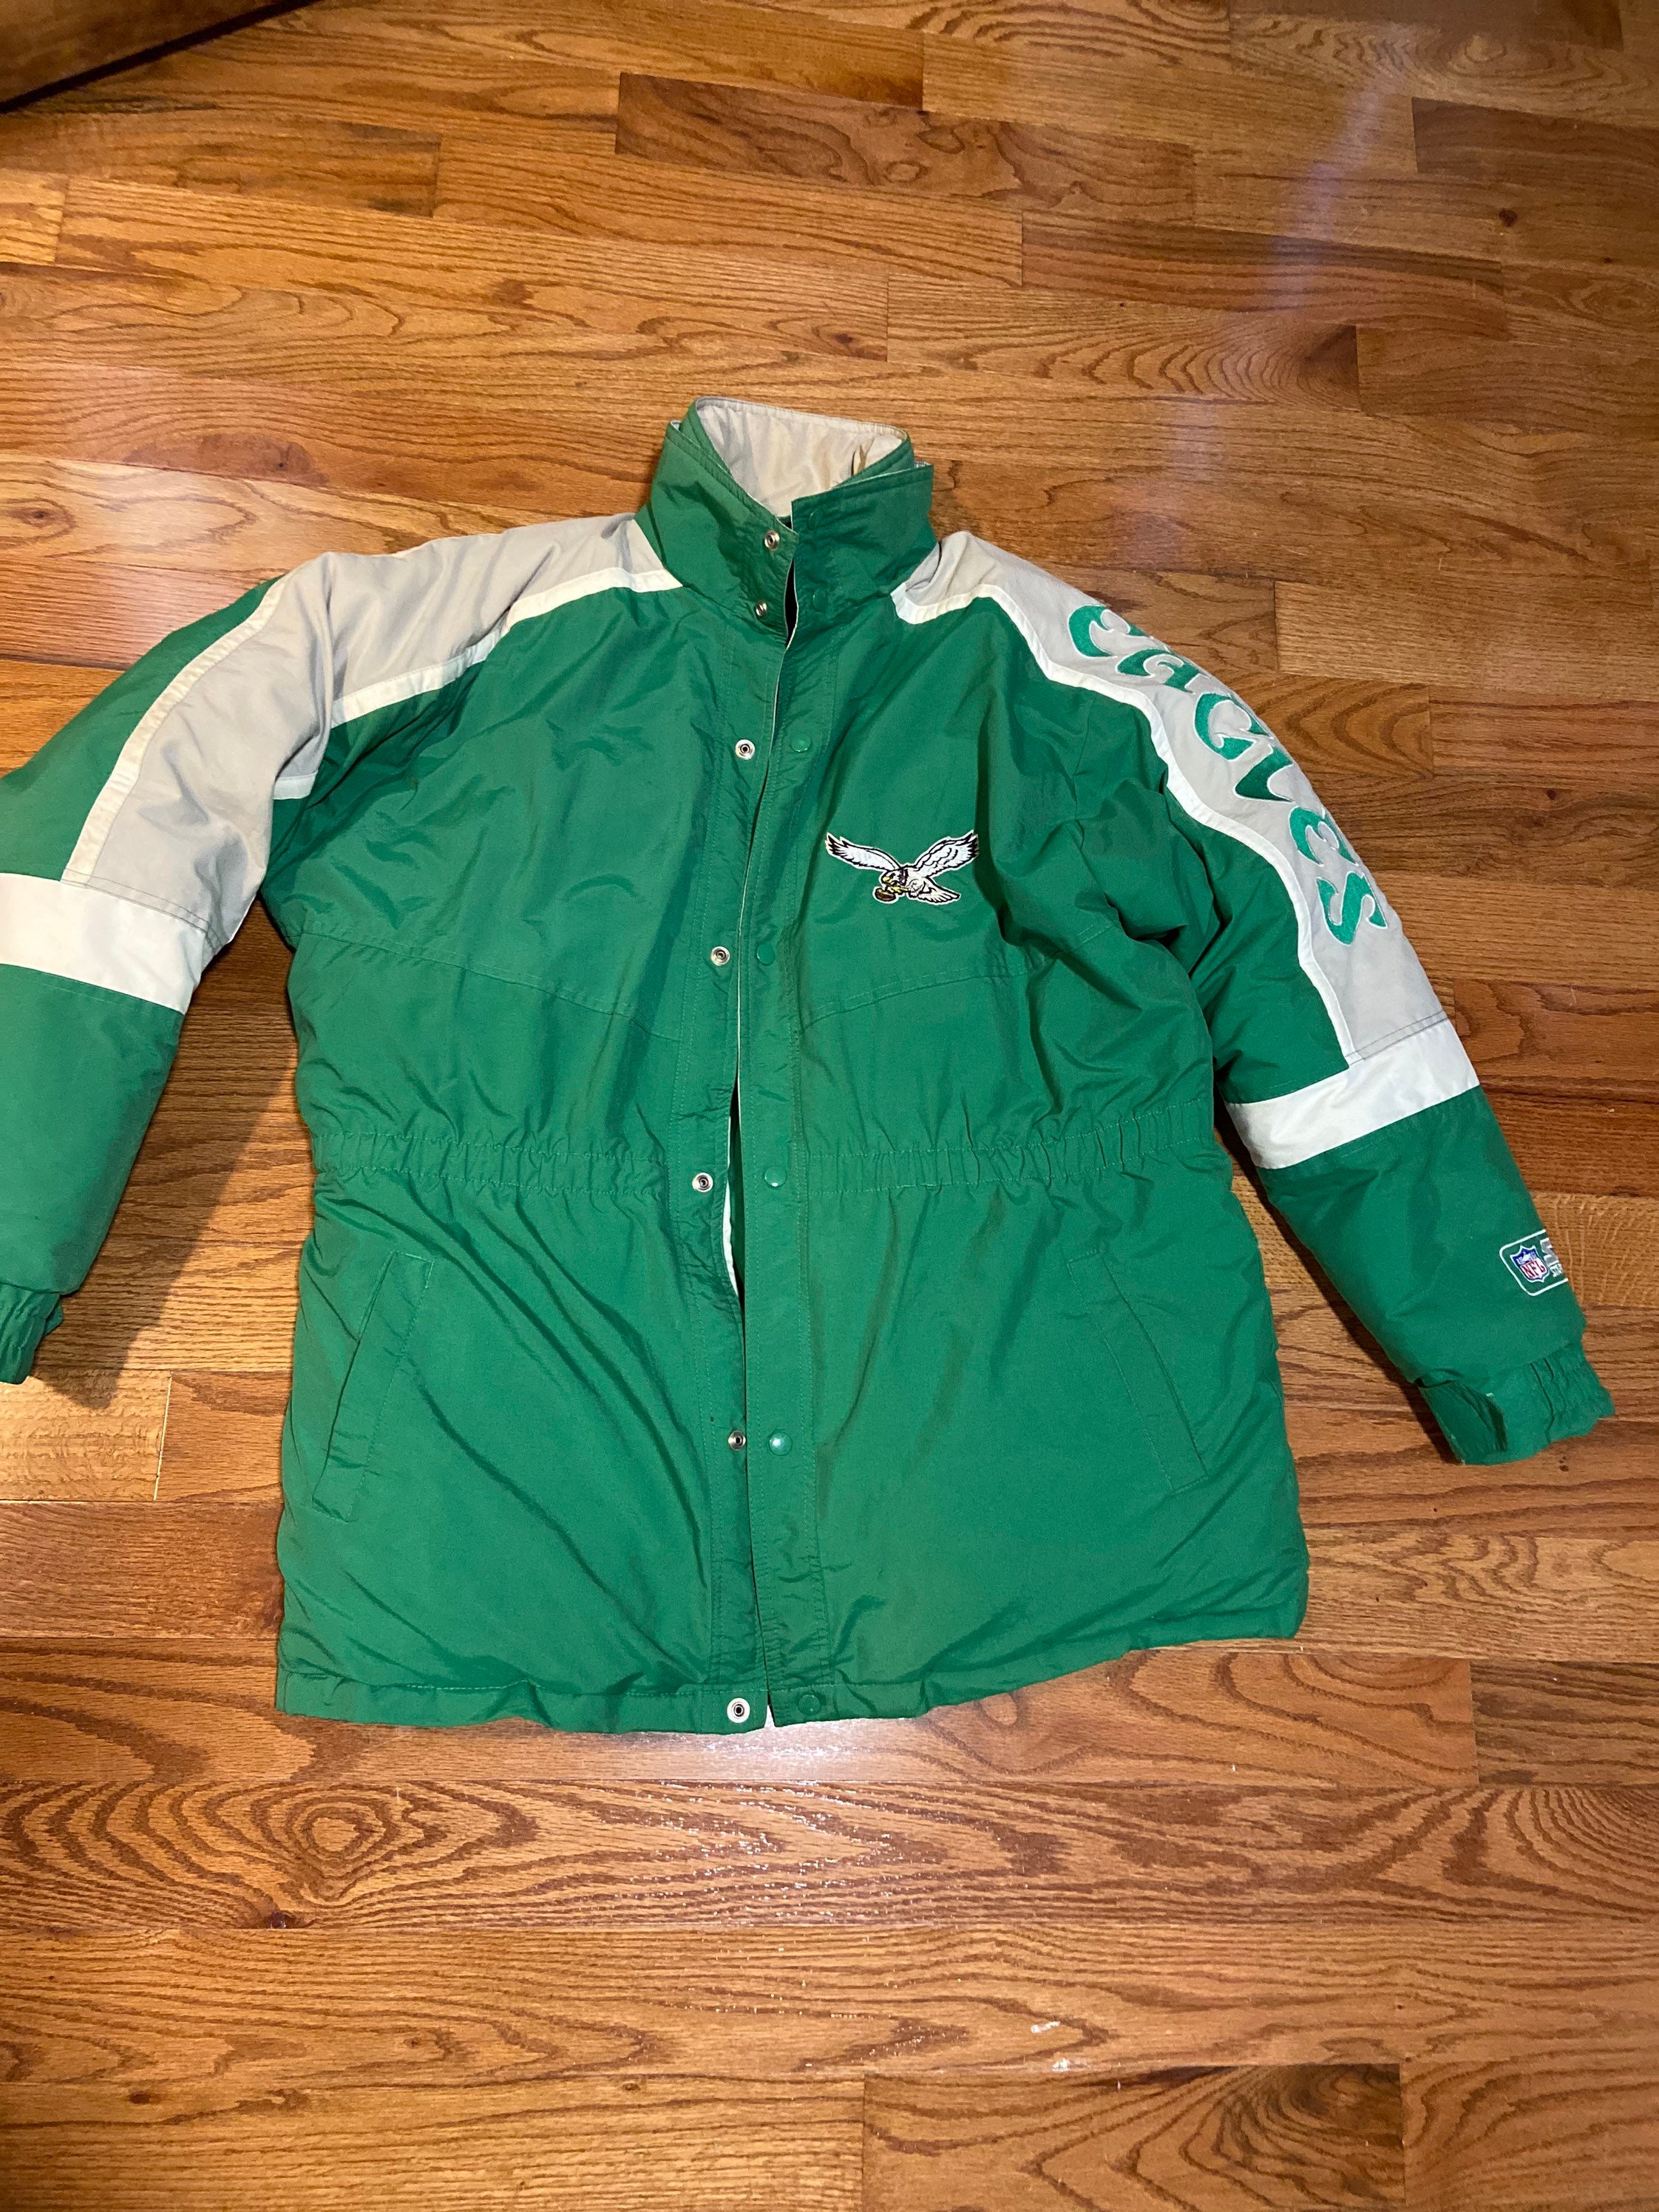 kelly green 90's eagles starter jacket